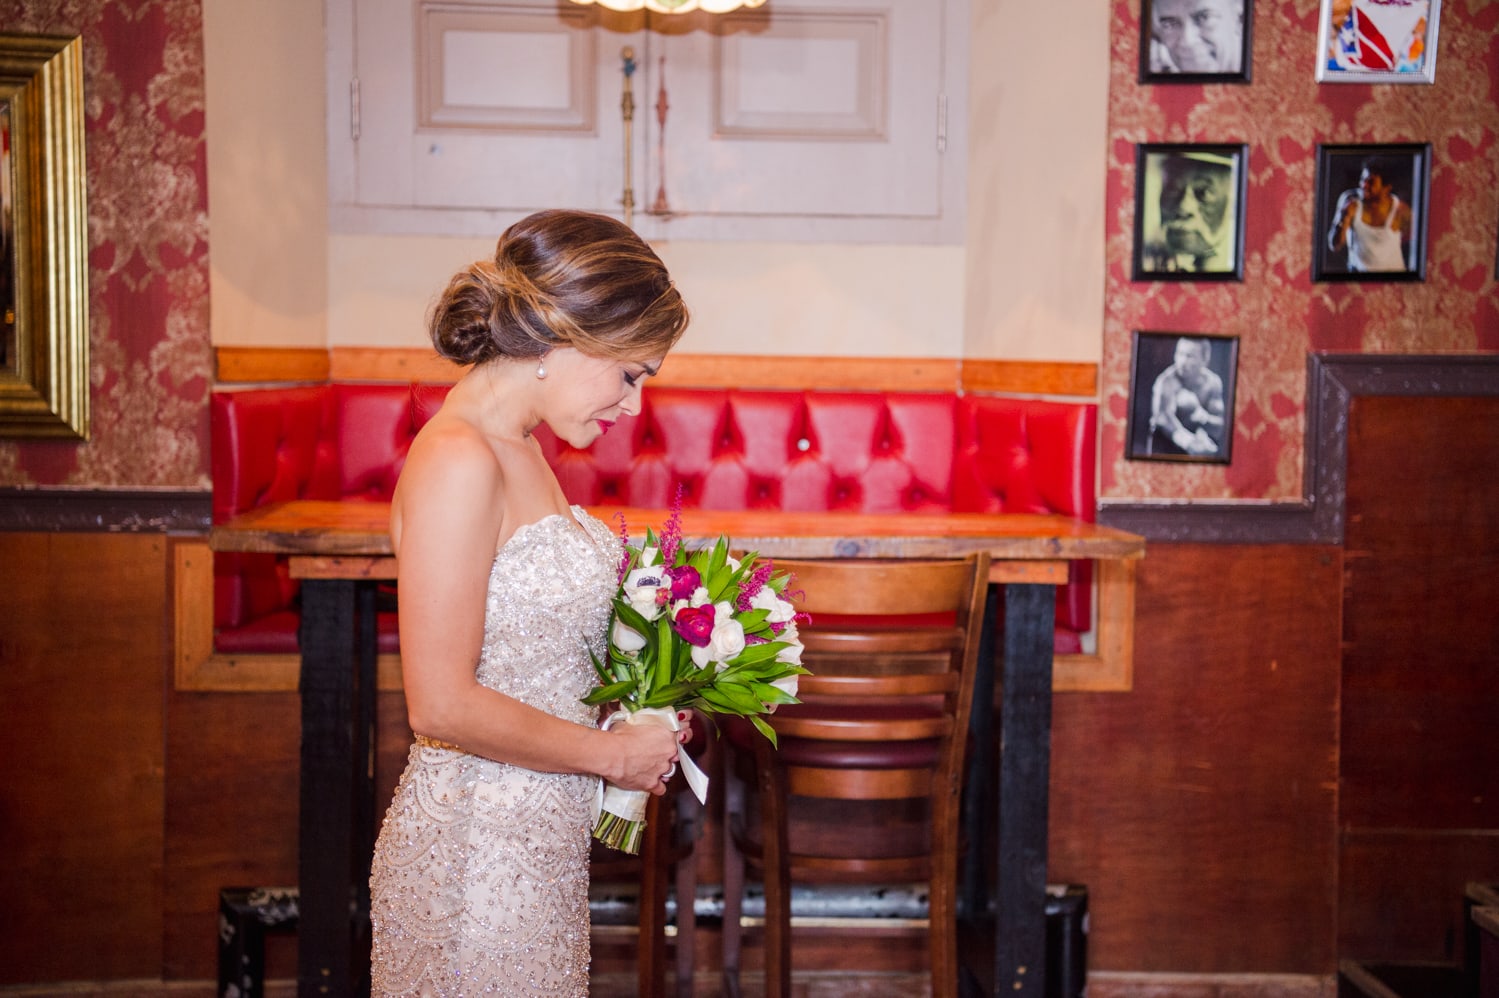 destination wedding photographer Camille Fontanez shares an elopement at an indie movie theater